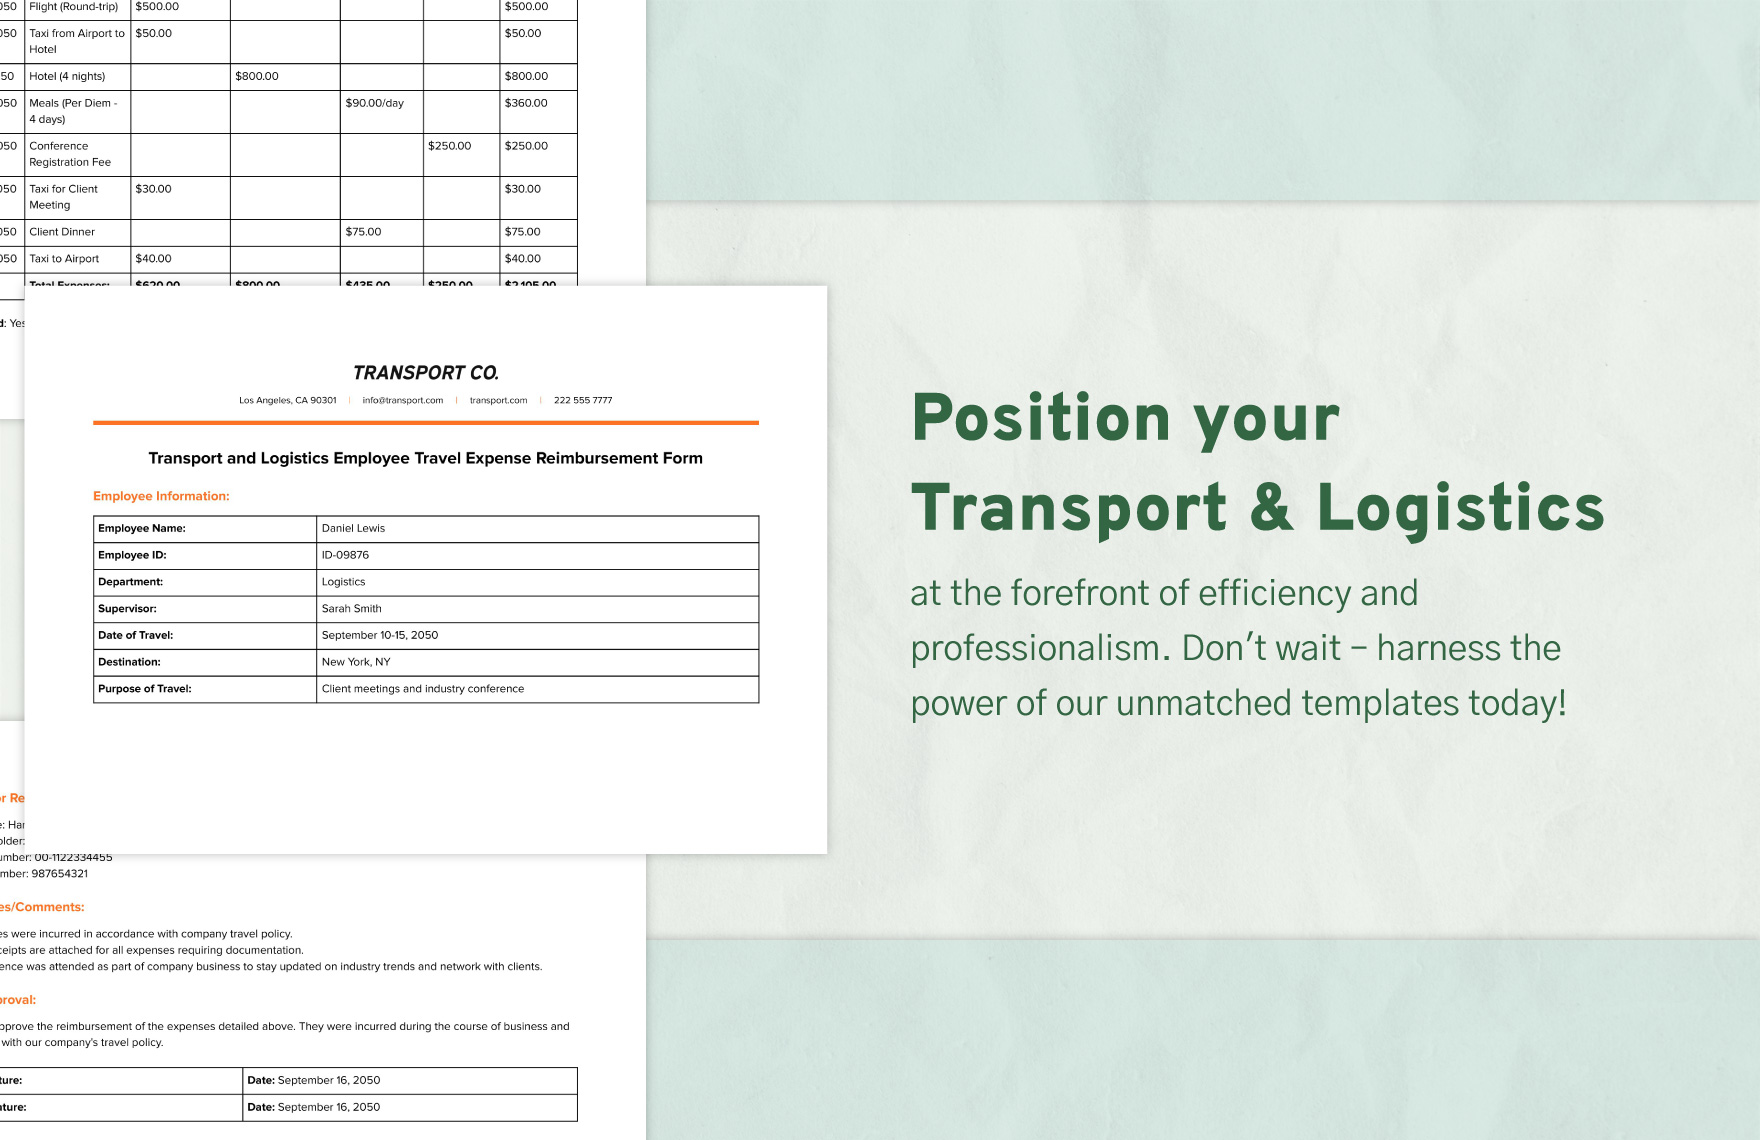 Transport and Logistics Employee Travel Expense Reimbursement Form Template